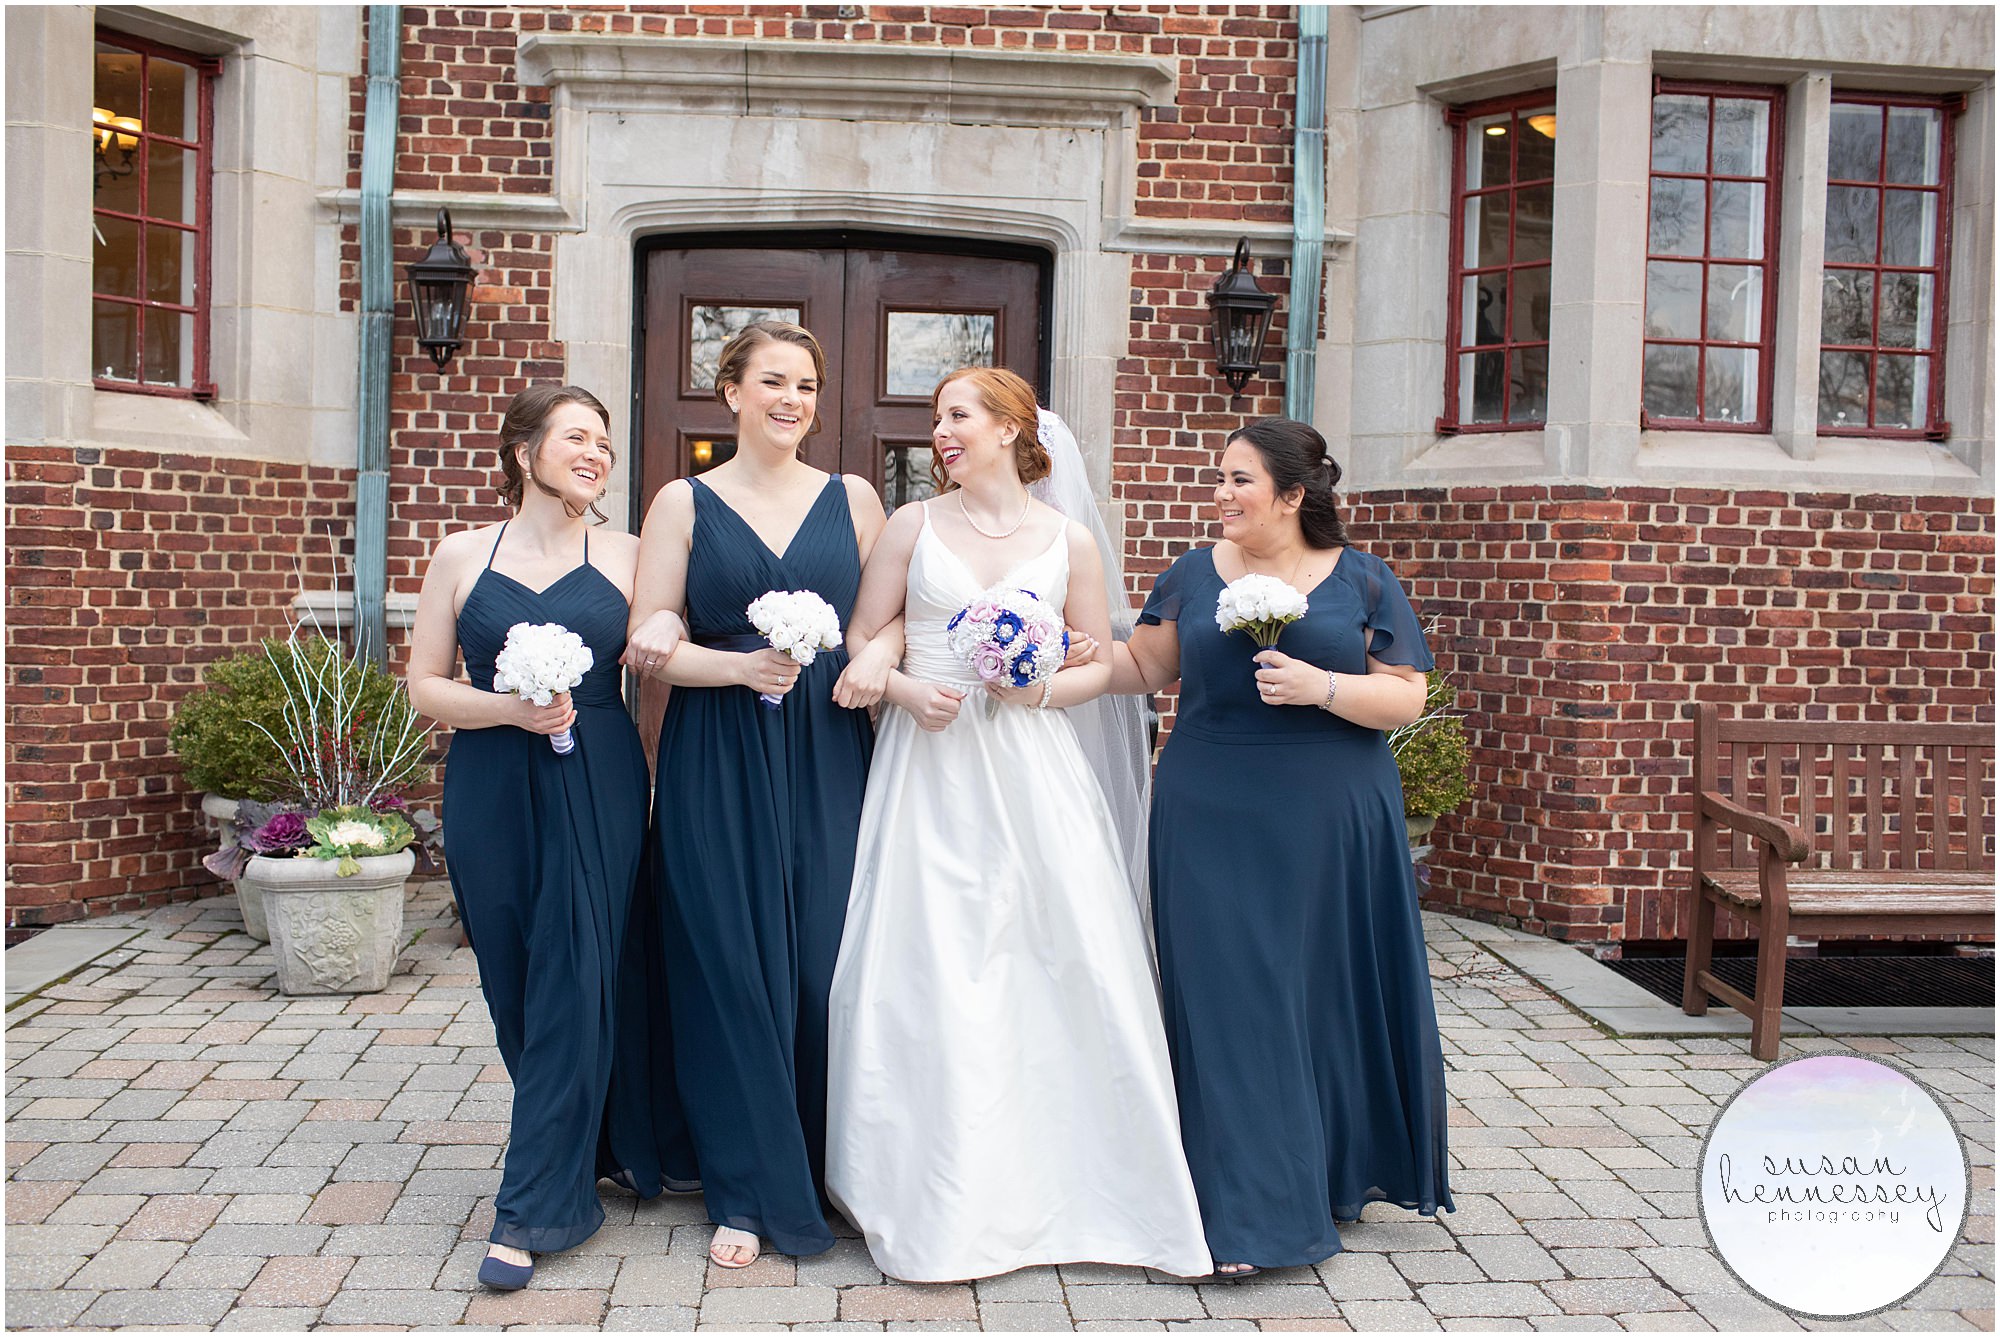 Bride and bridesmaids in navy blue